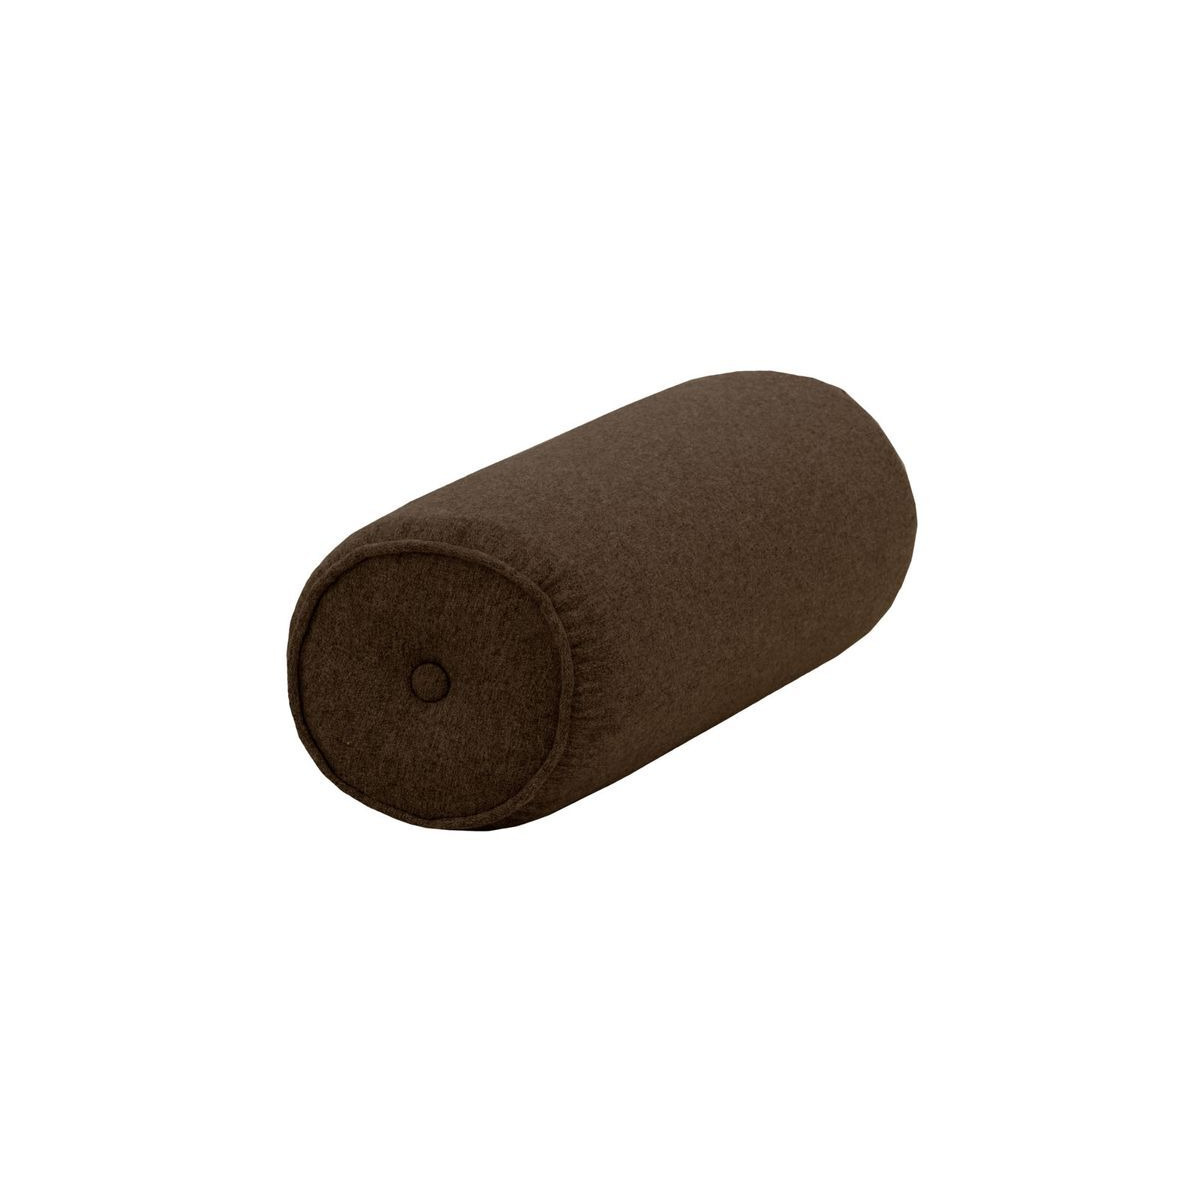 Bolster cushion, brown - image 1